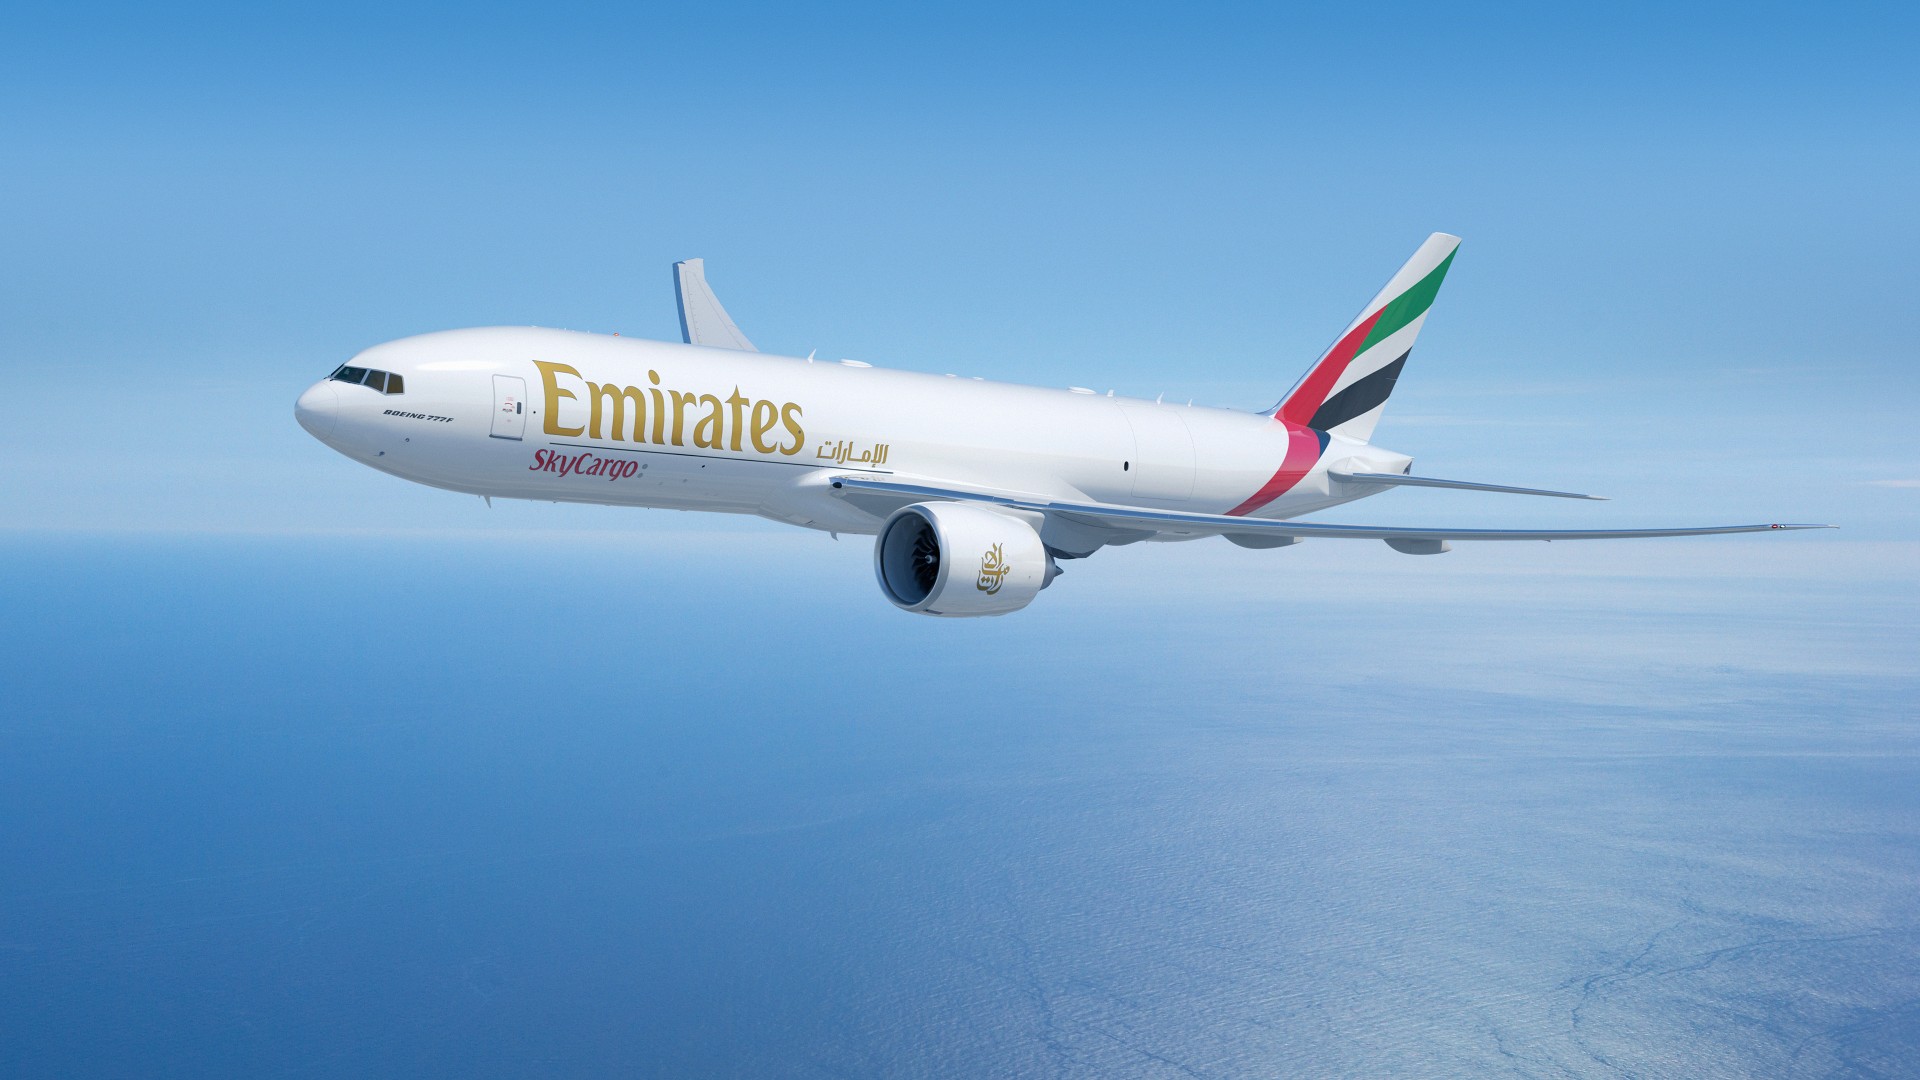 www.emirates.com